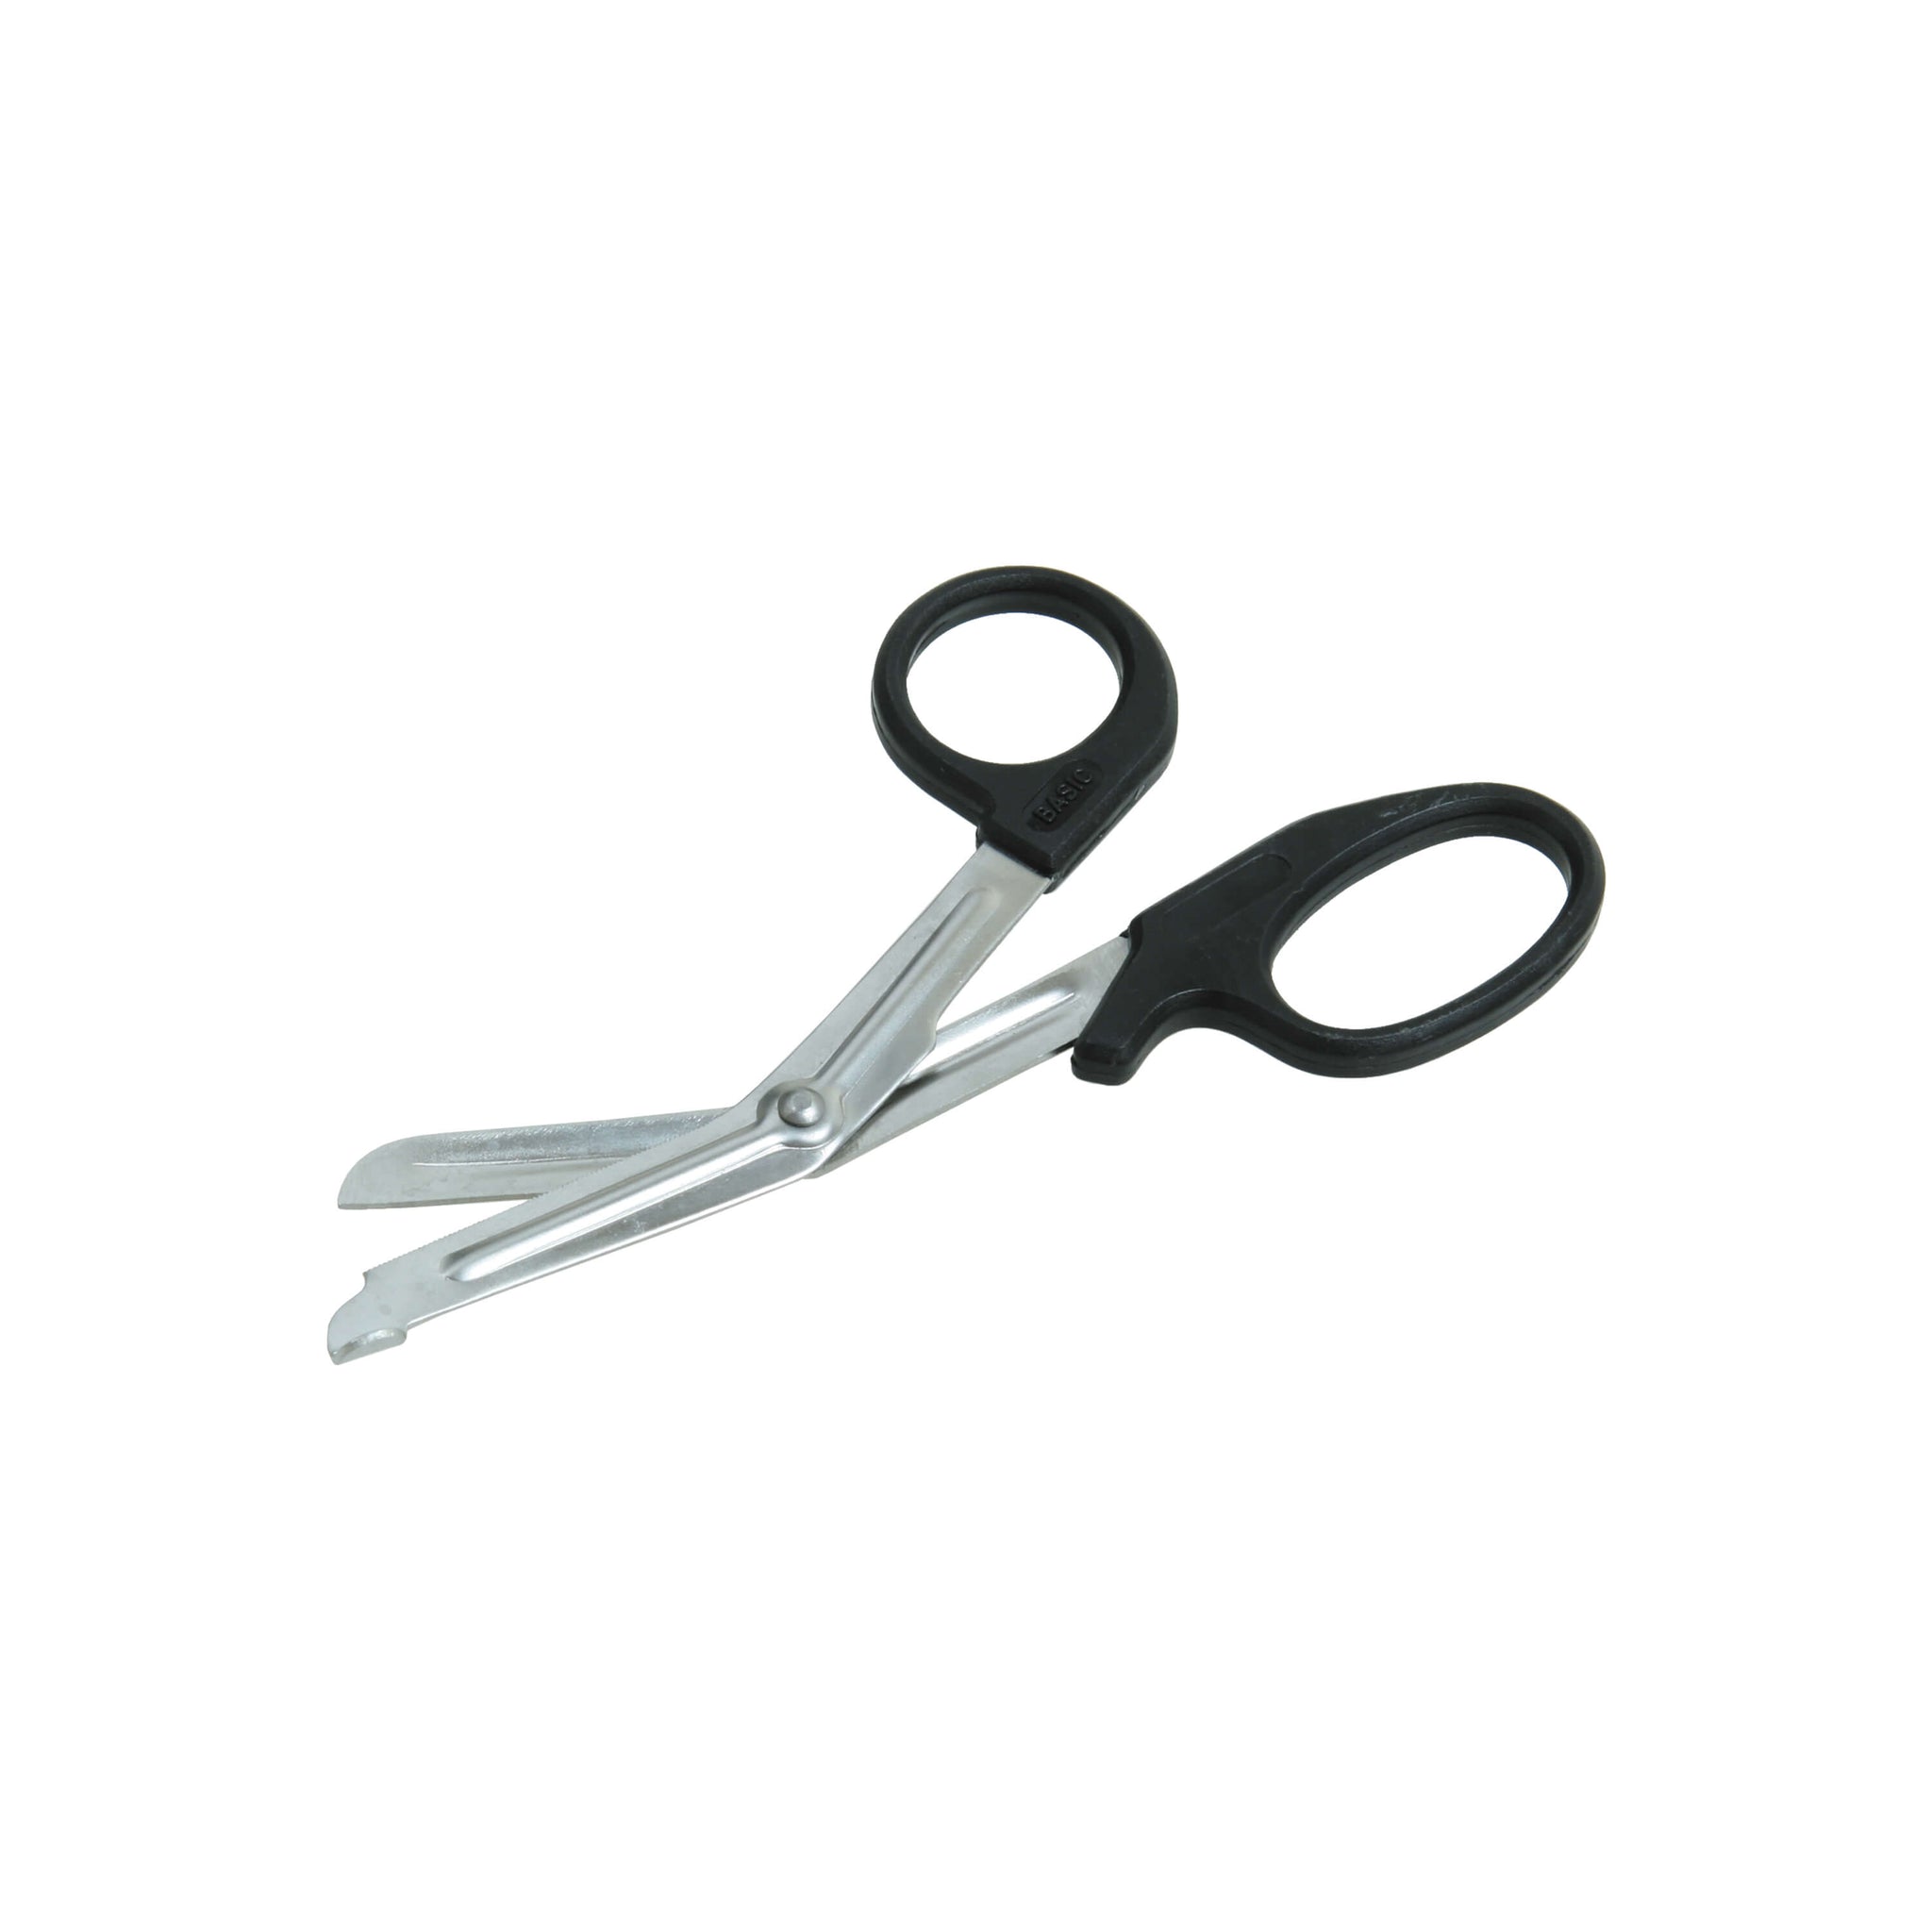 Basic Universal Scissors- Black, 14 cm